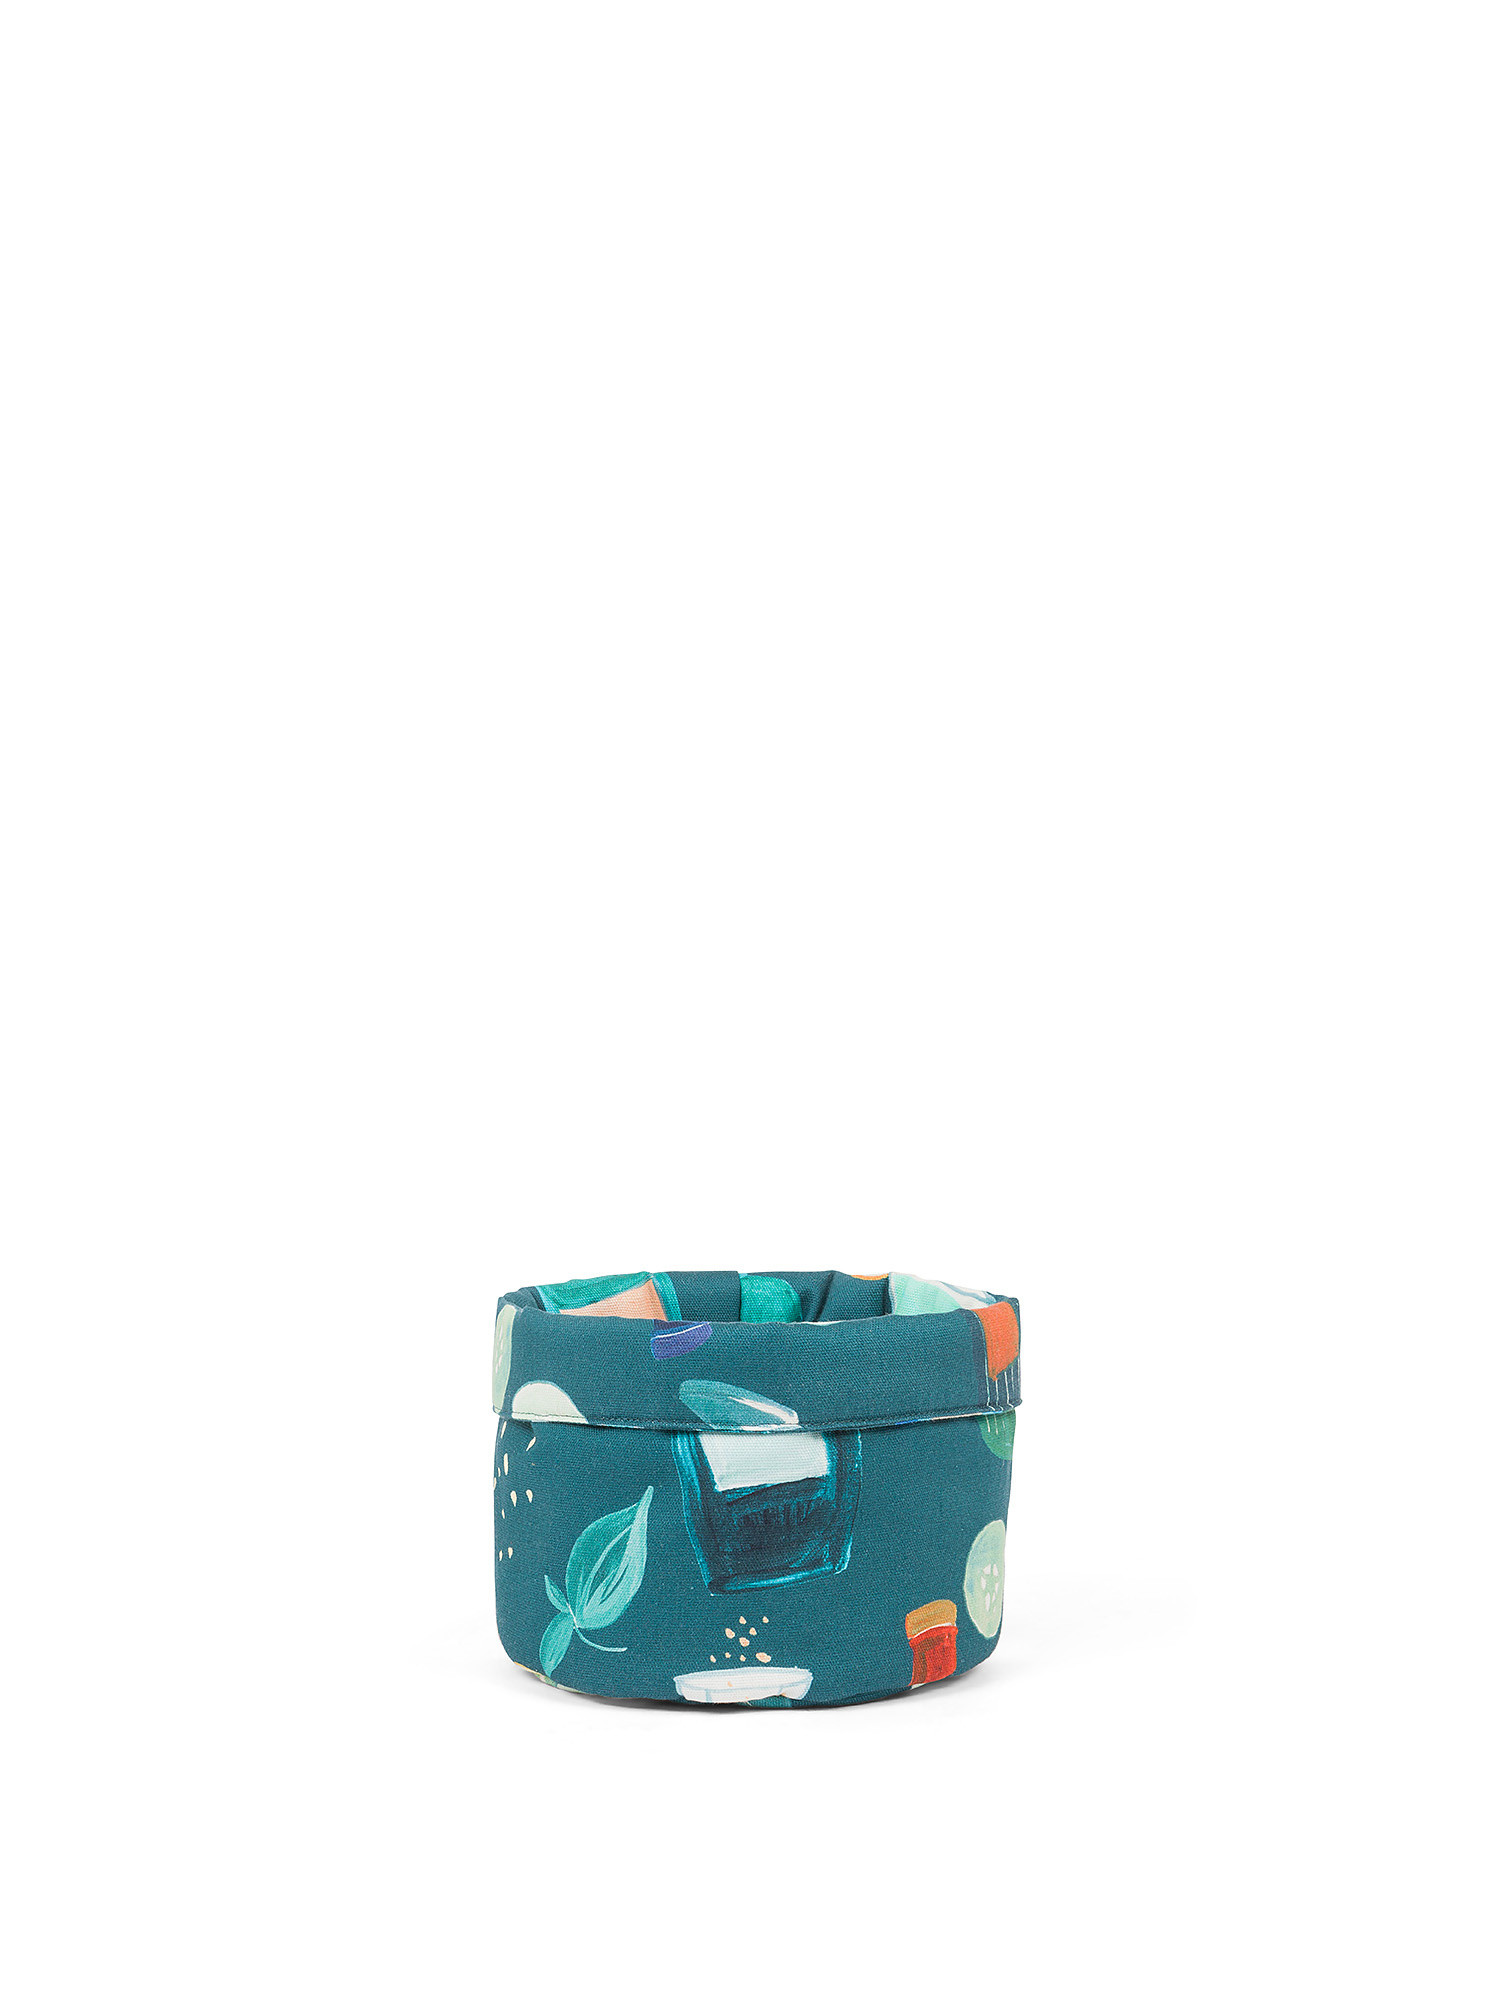 Aperitif print panama cotton storage basket, Multicolor, large image number 0